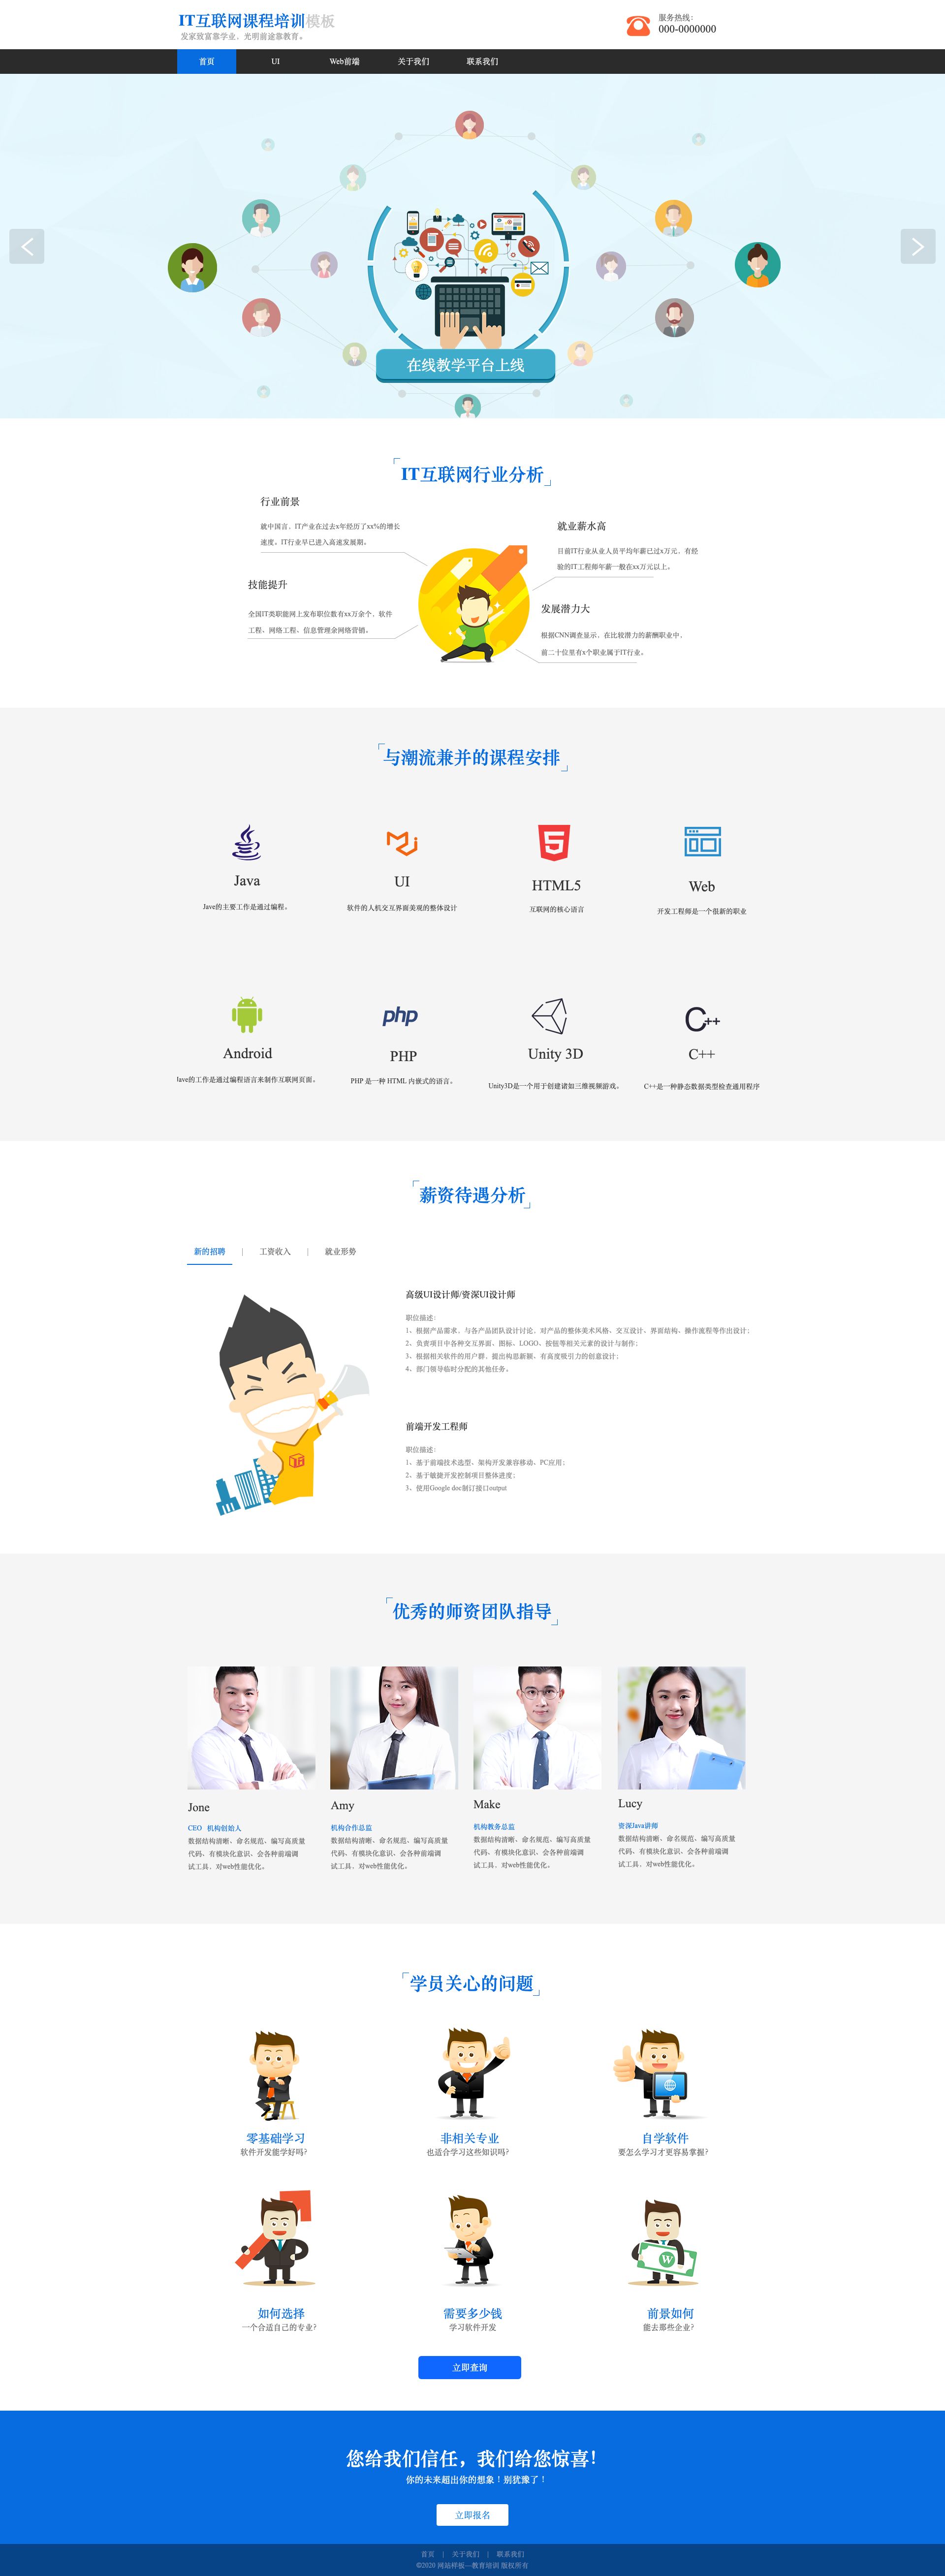 IT程序員(yuán)互聯網課程培訓公司網站(zhàn)模闆.jpg